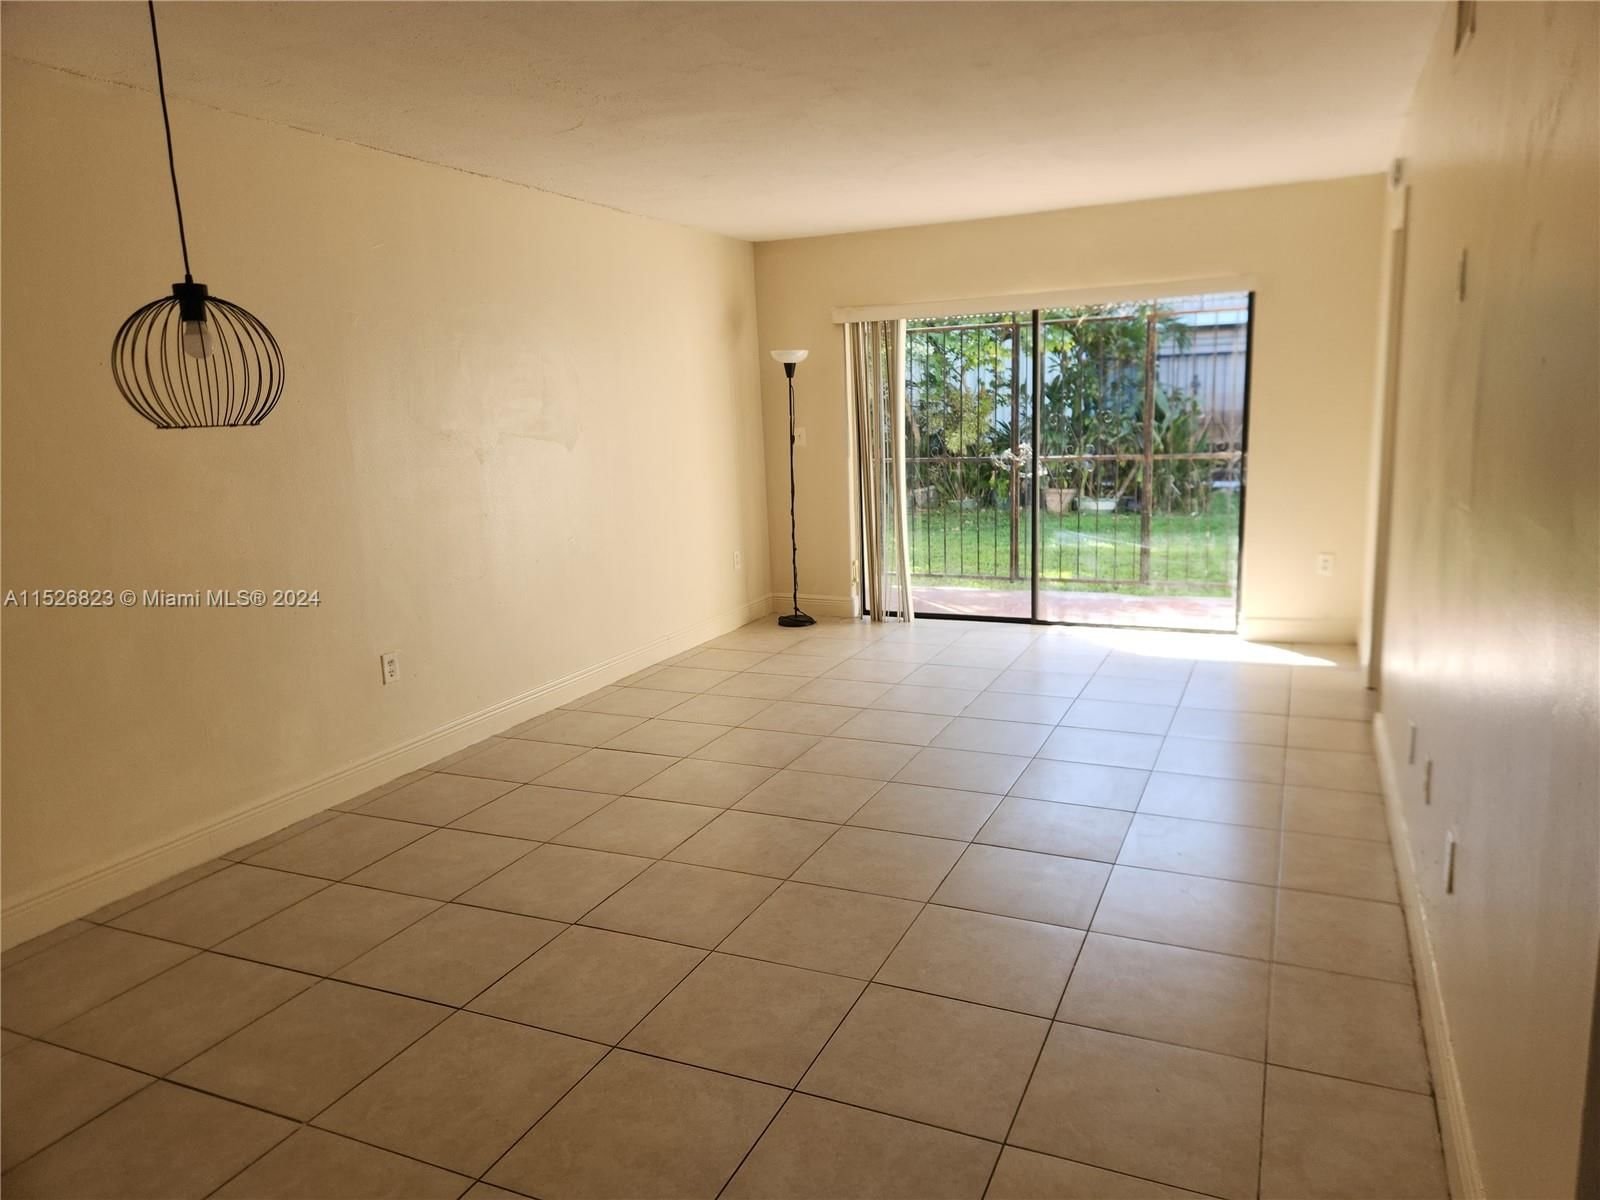 Real estate property located at 6259 24th Ave #102-8, Miami-Dade County, FLAMINGO CONDO, Hialeah, FL